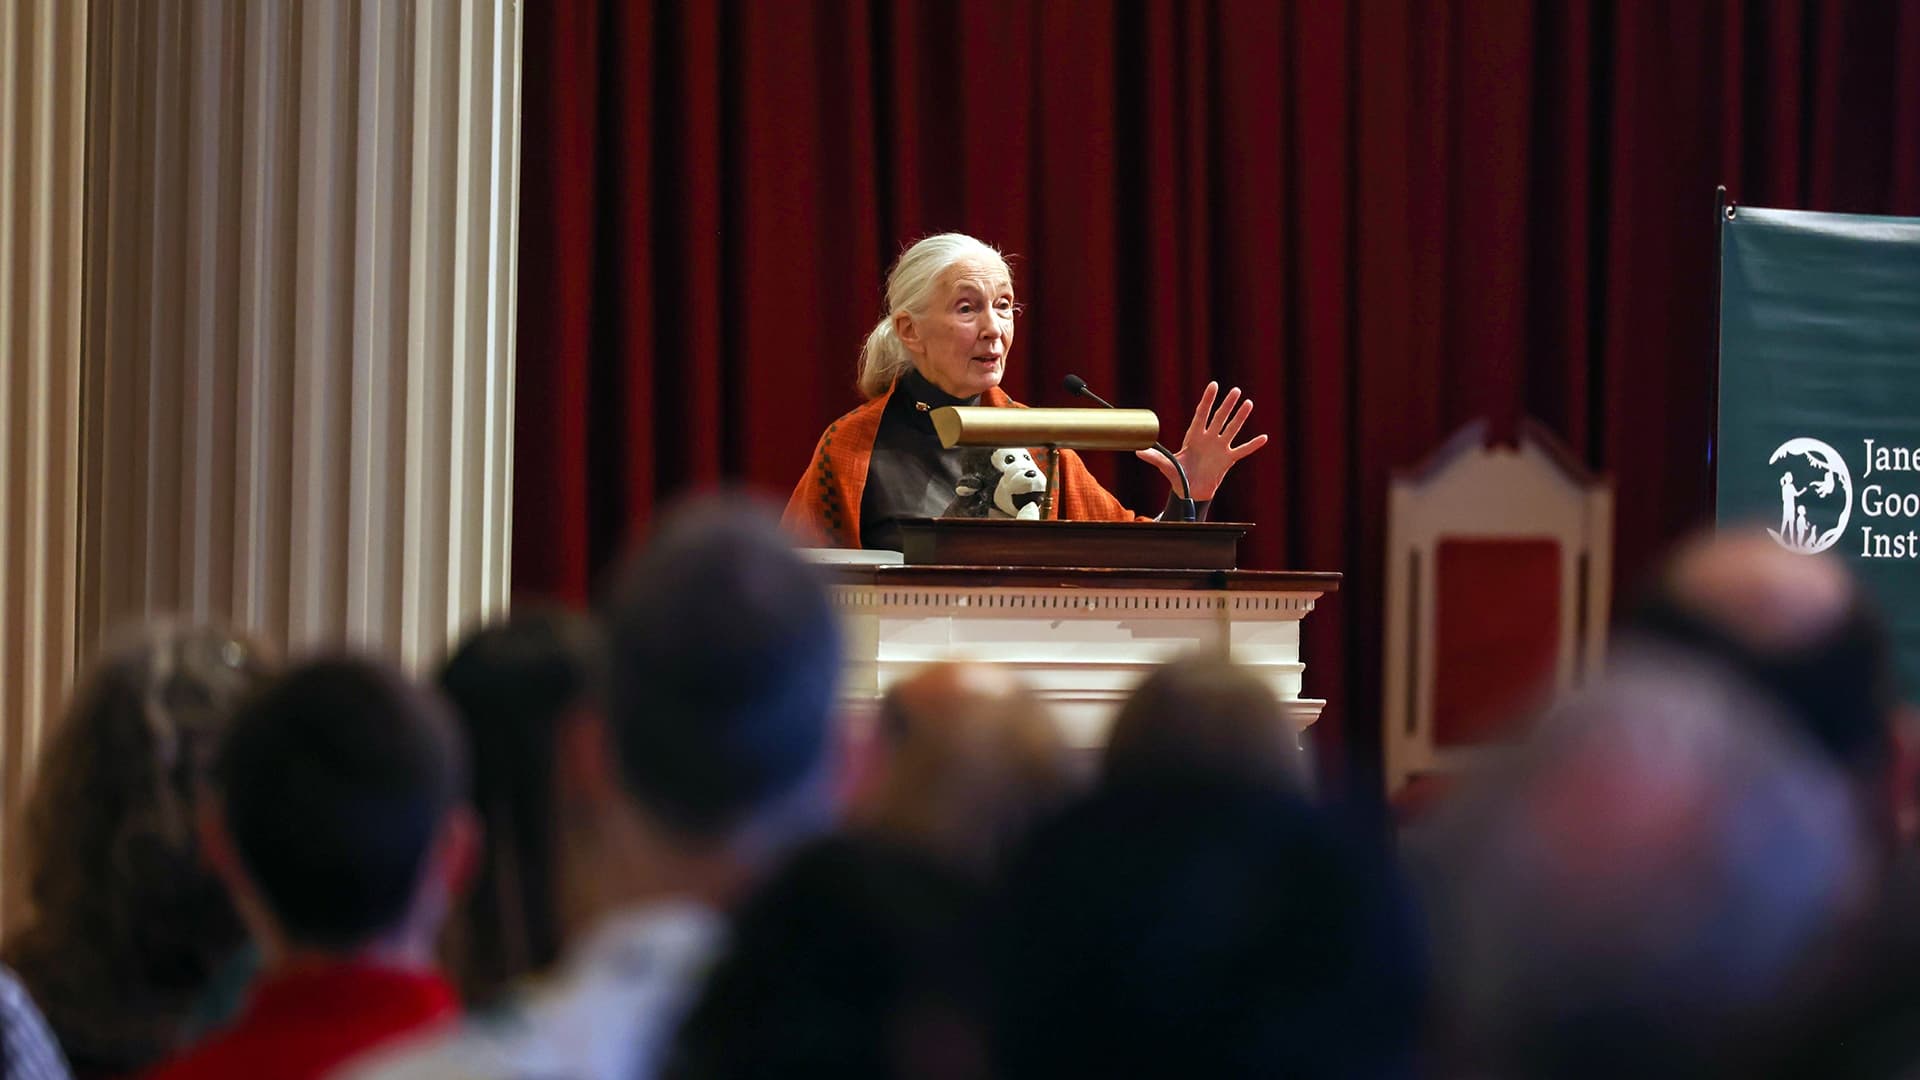 Jane Goodall onstage